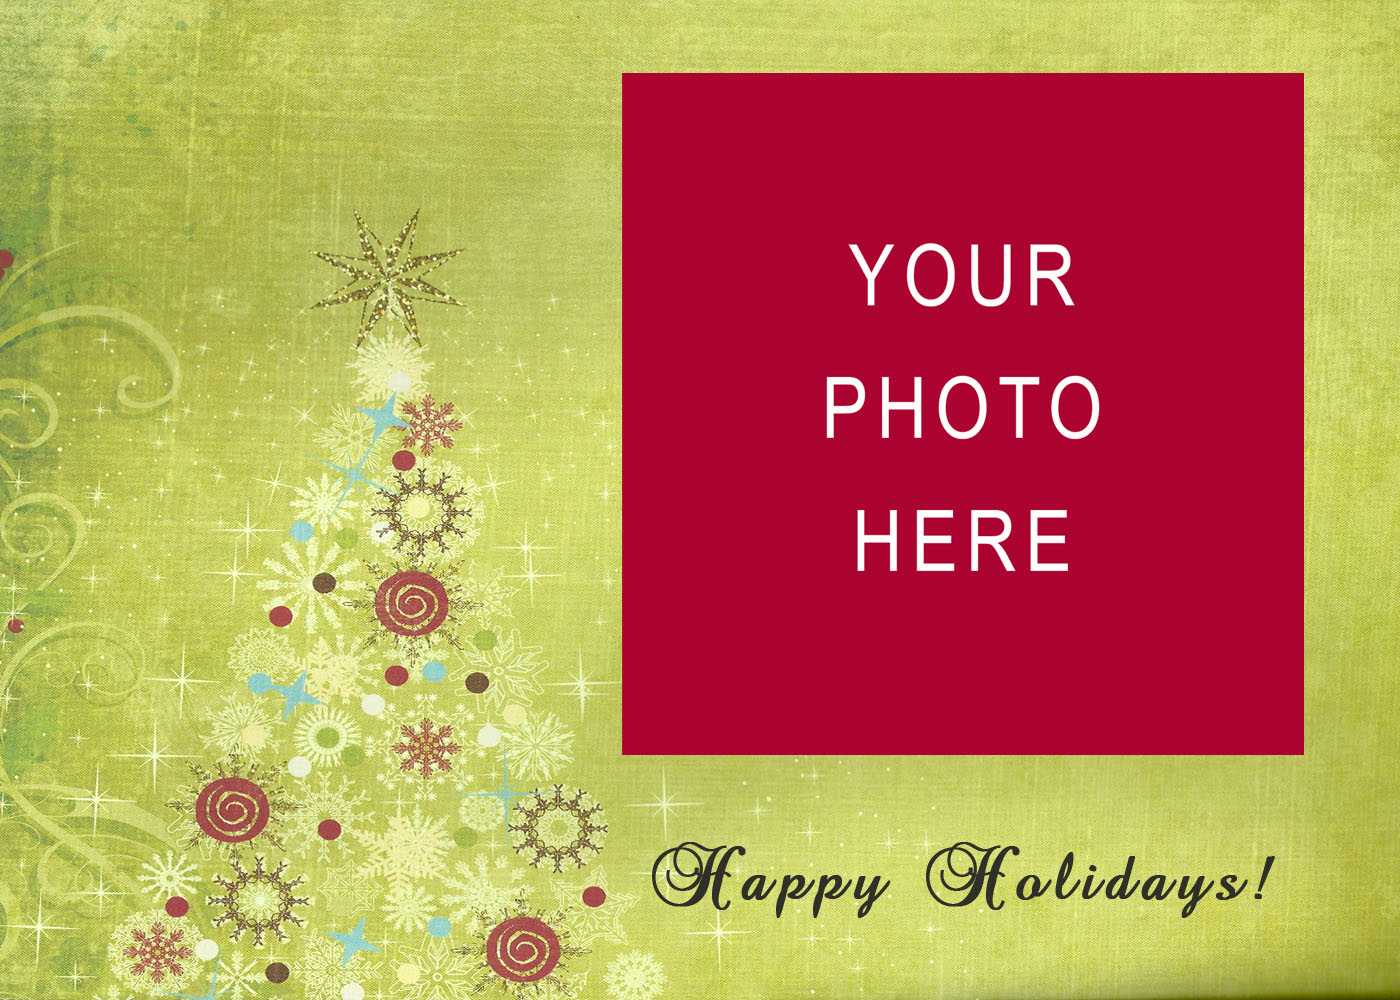 Free Christmas Card Templates | E Commercewordpress Regarding Free Christmas Card Templates For Photographers